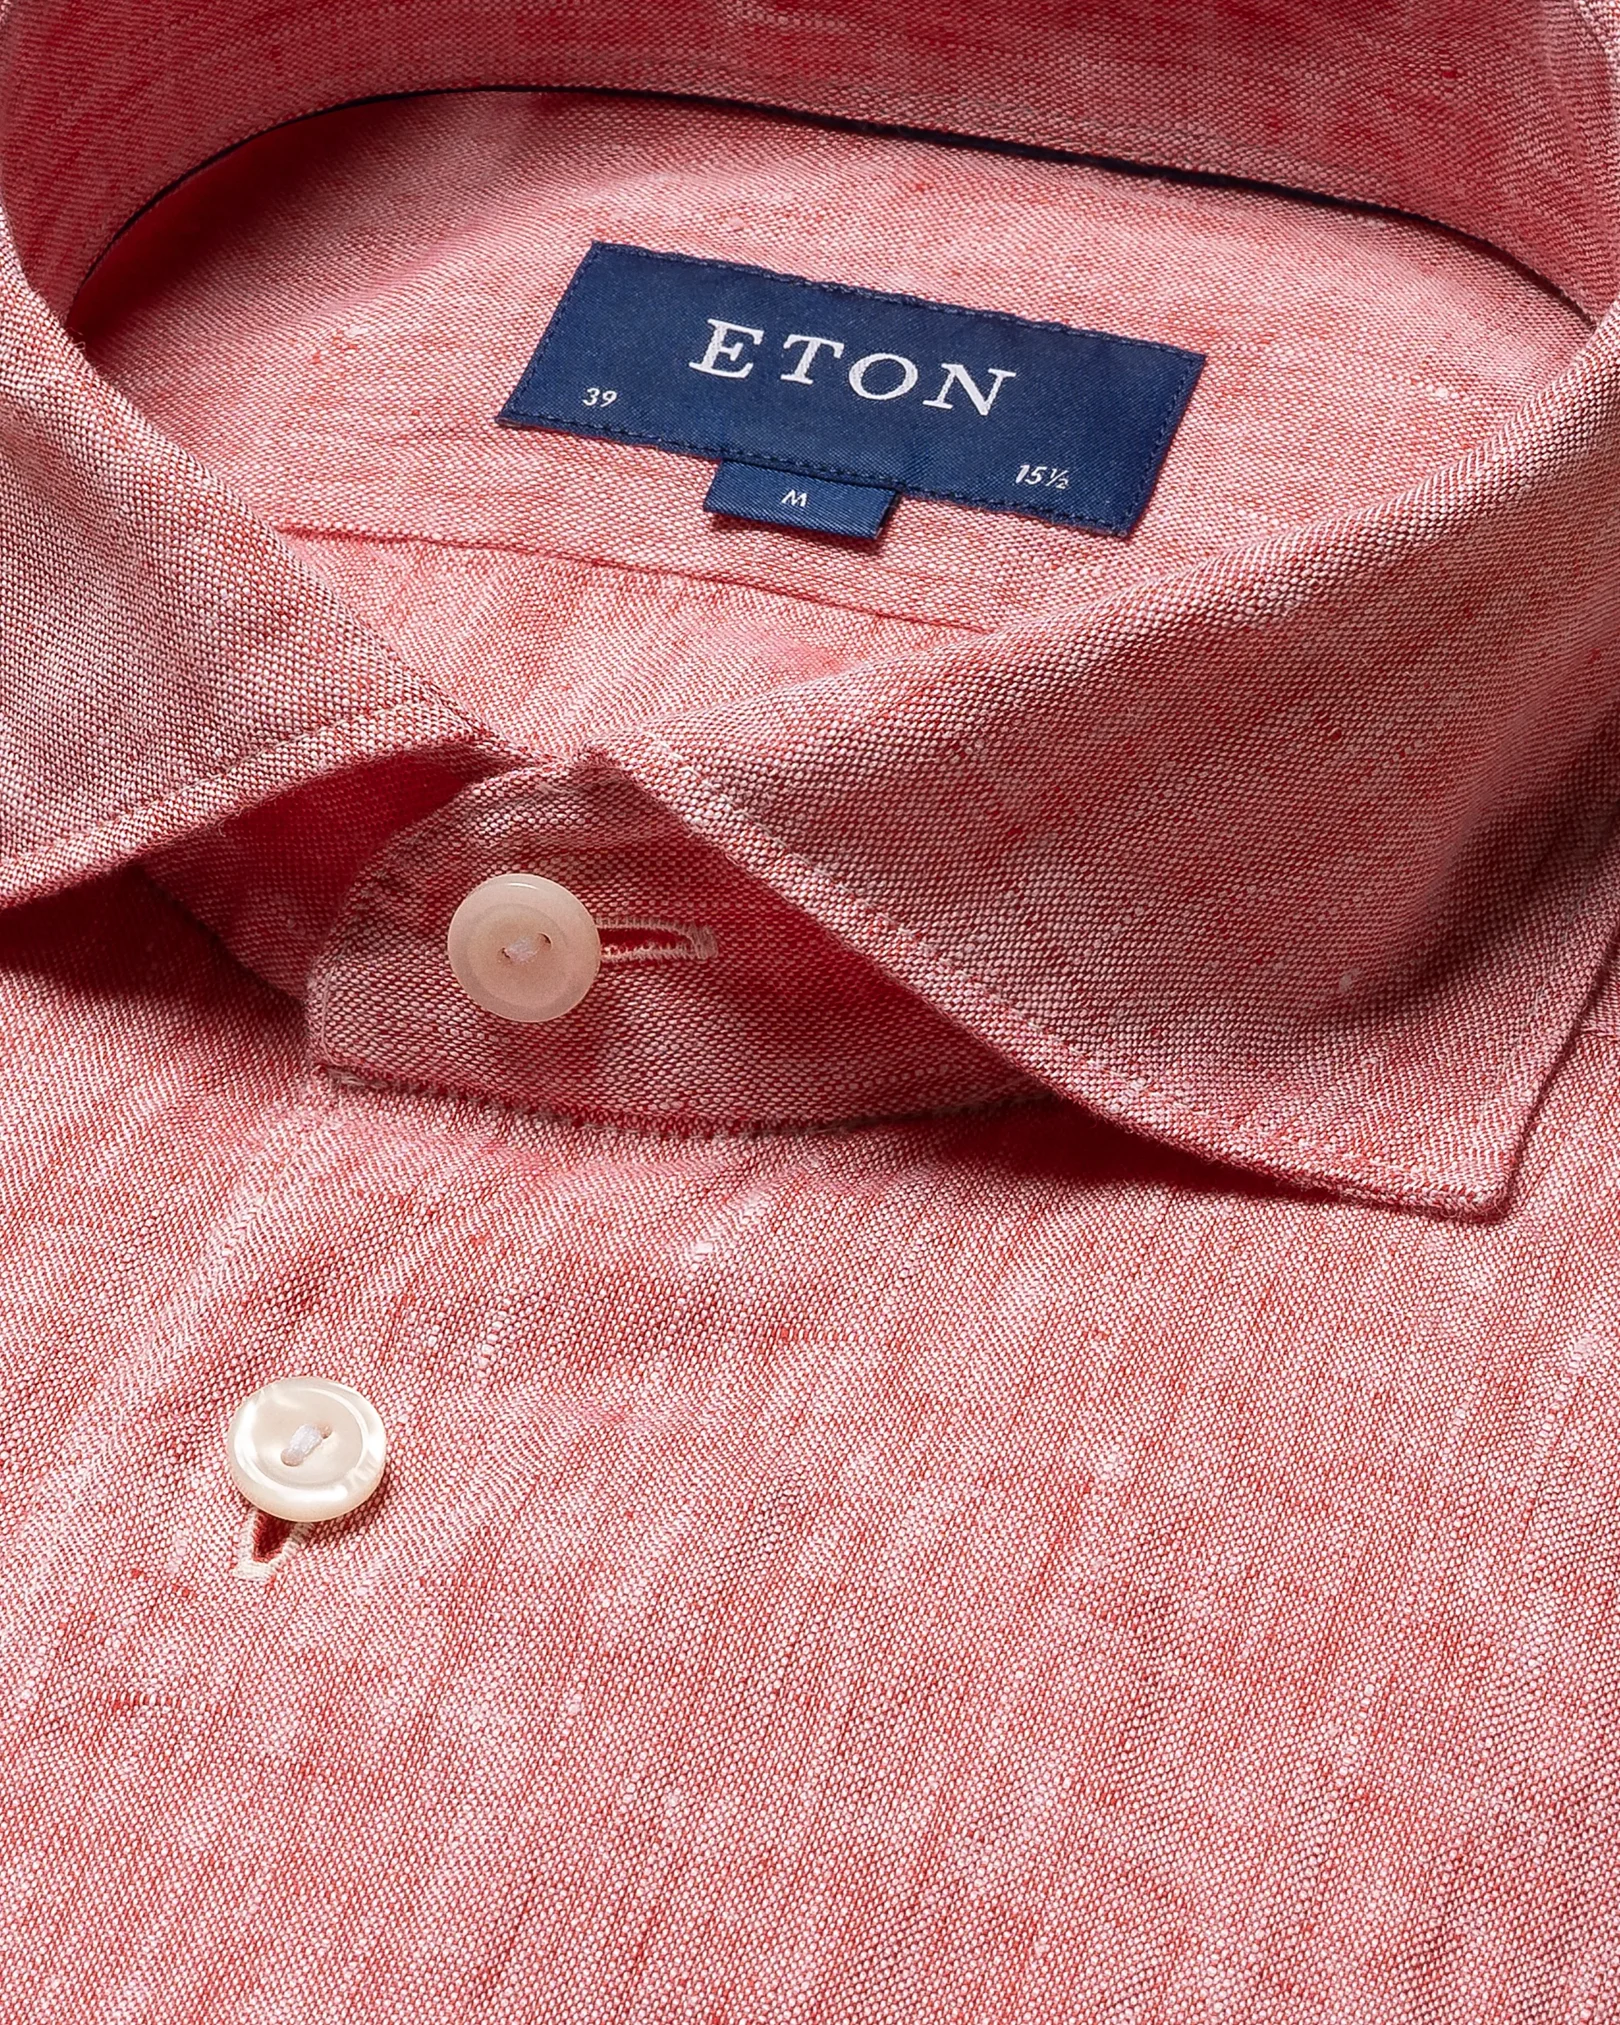 Eton - red linen shirts wide spread